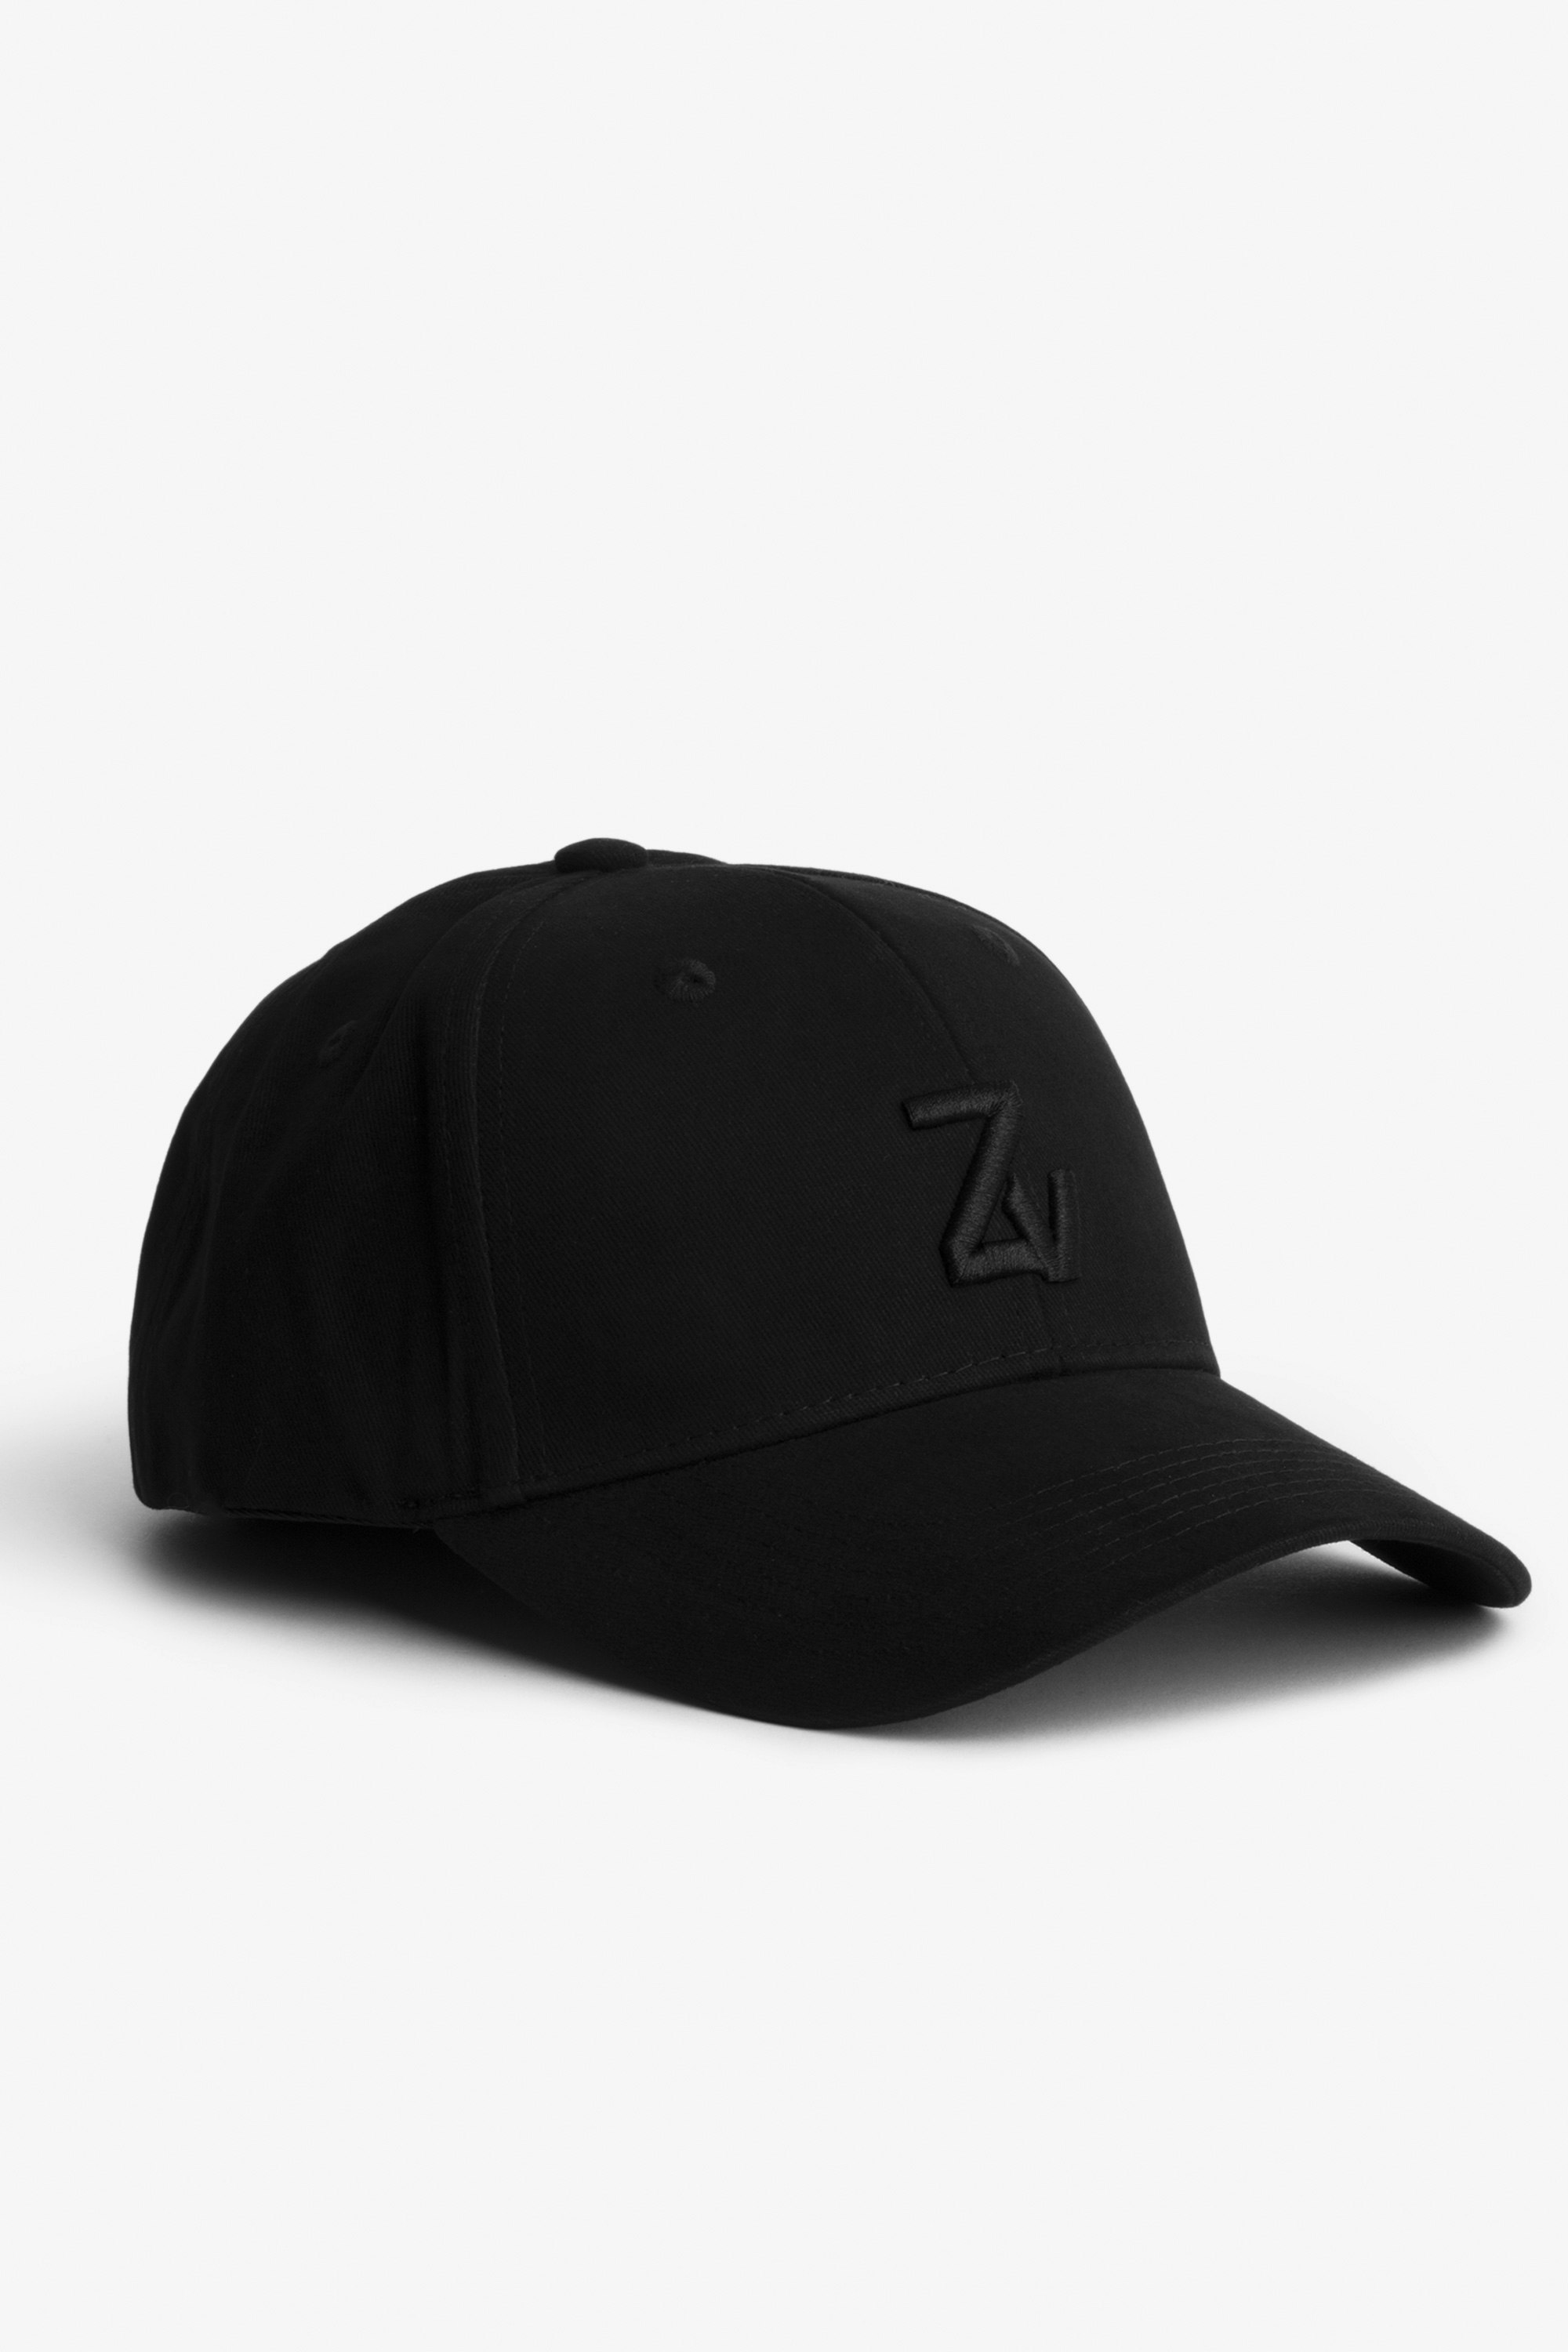 Klelia ZV Initial Cap Women’s black cap